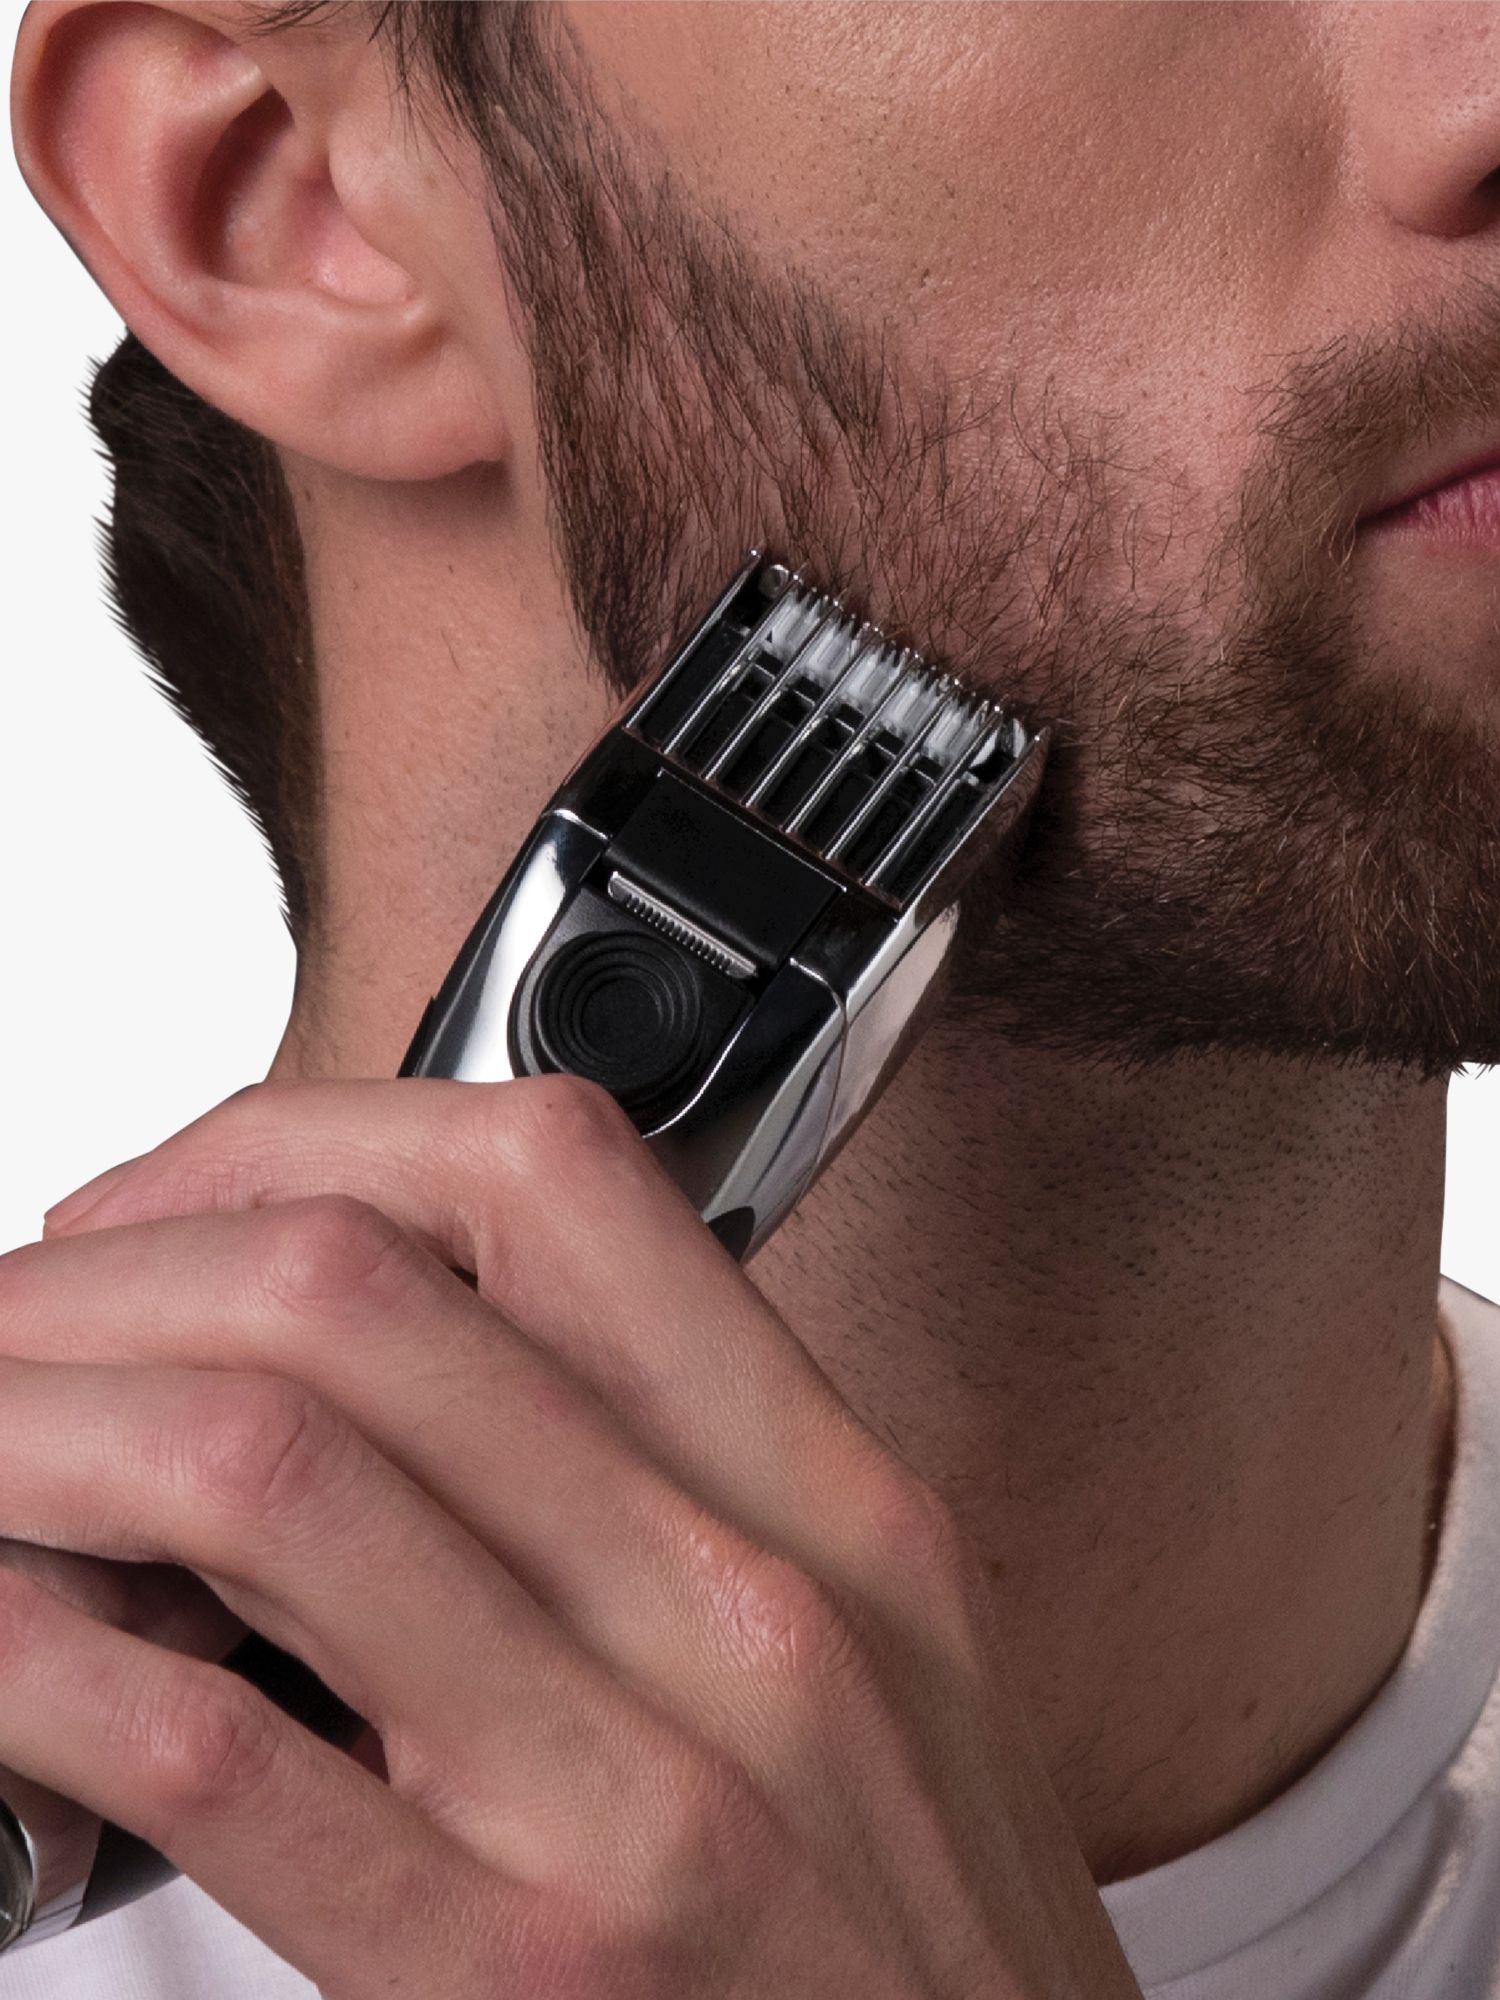 remington cordless beard trimmer